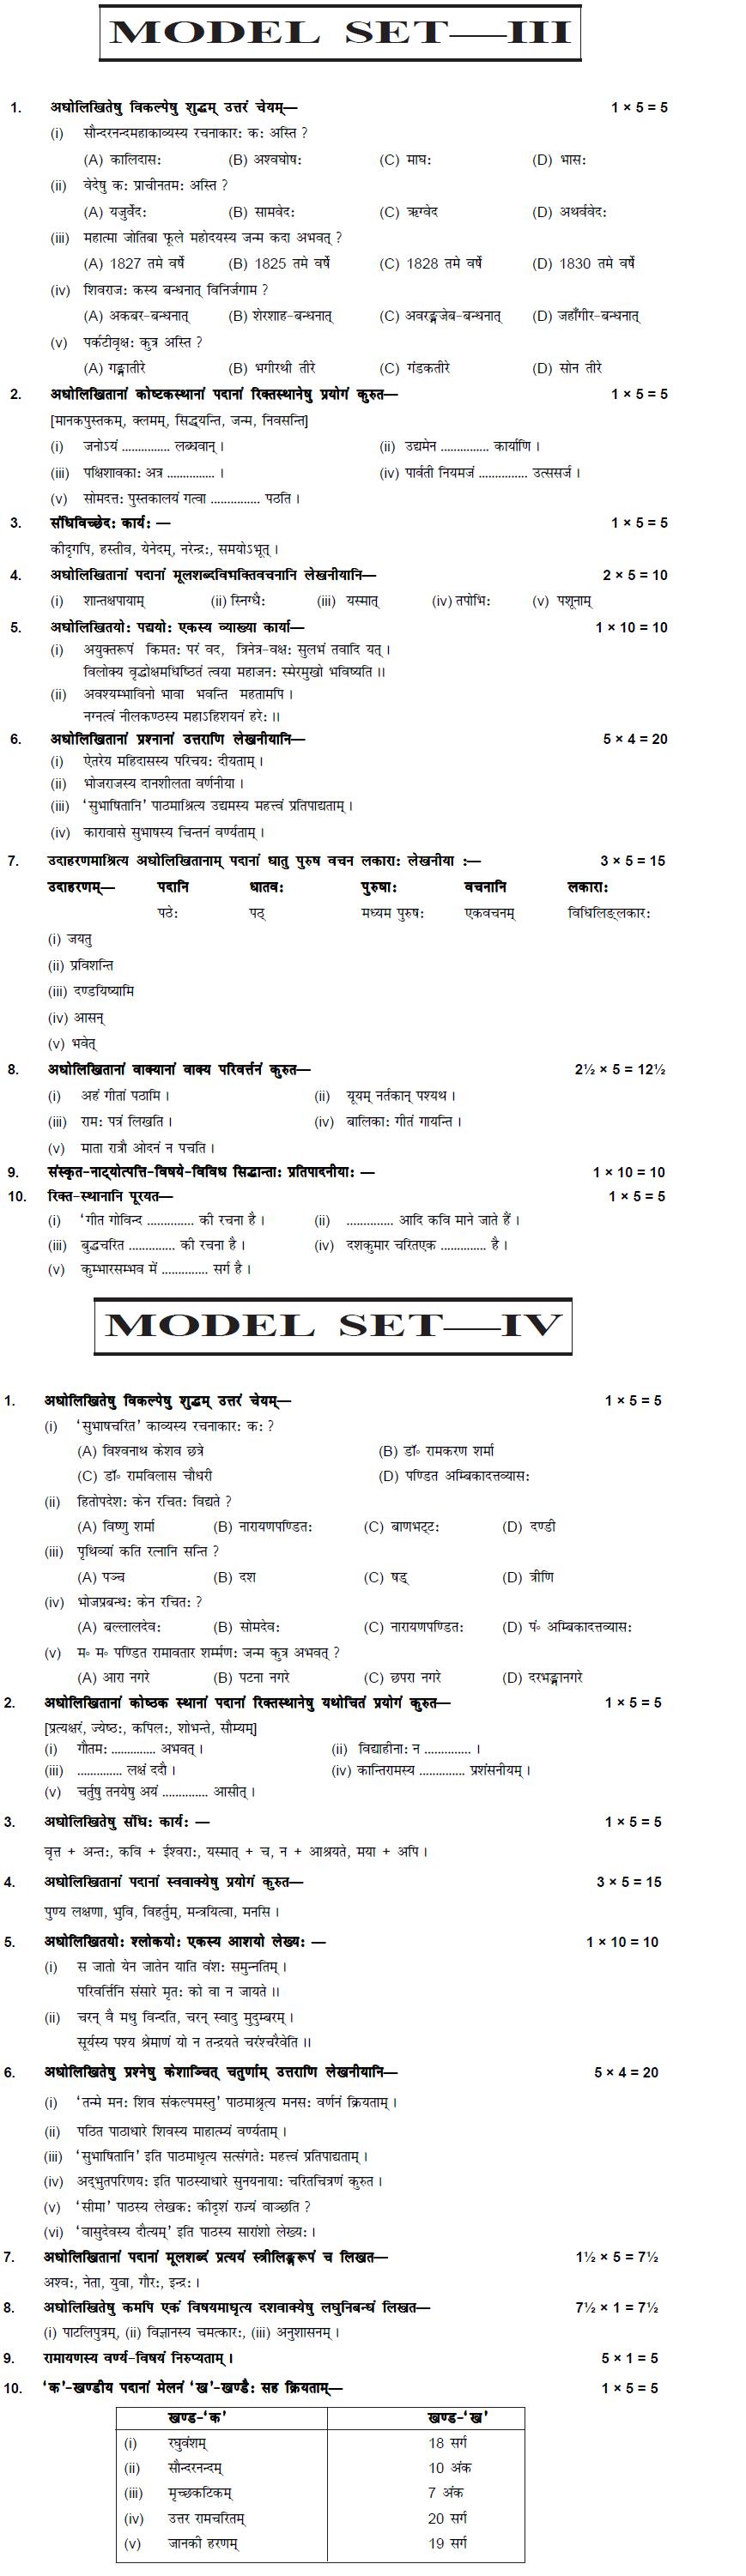 Bihar Board Class XI Humanities Model Question Papers - Sanskrit